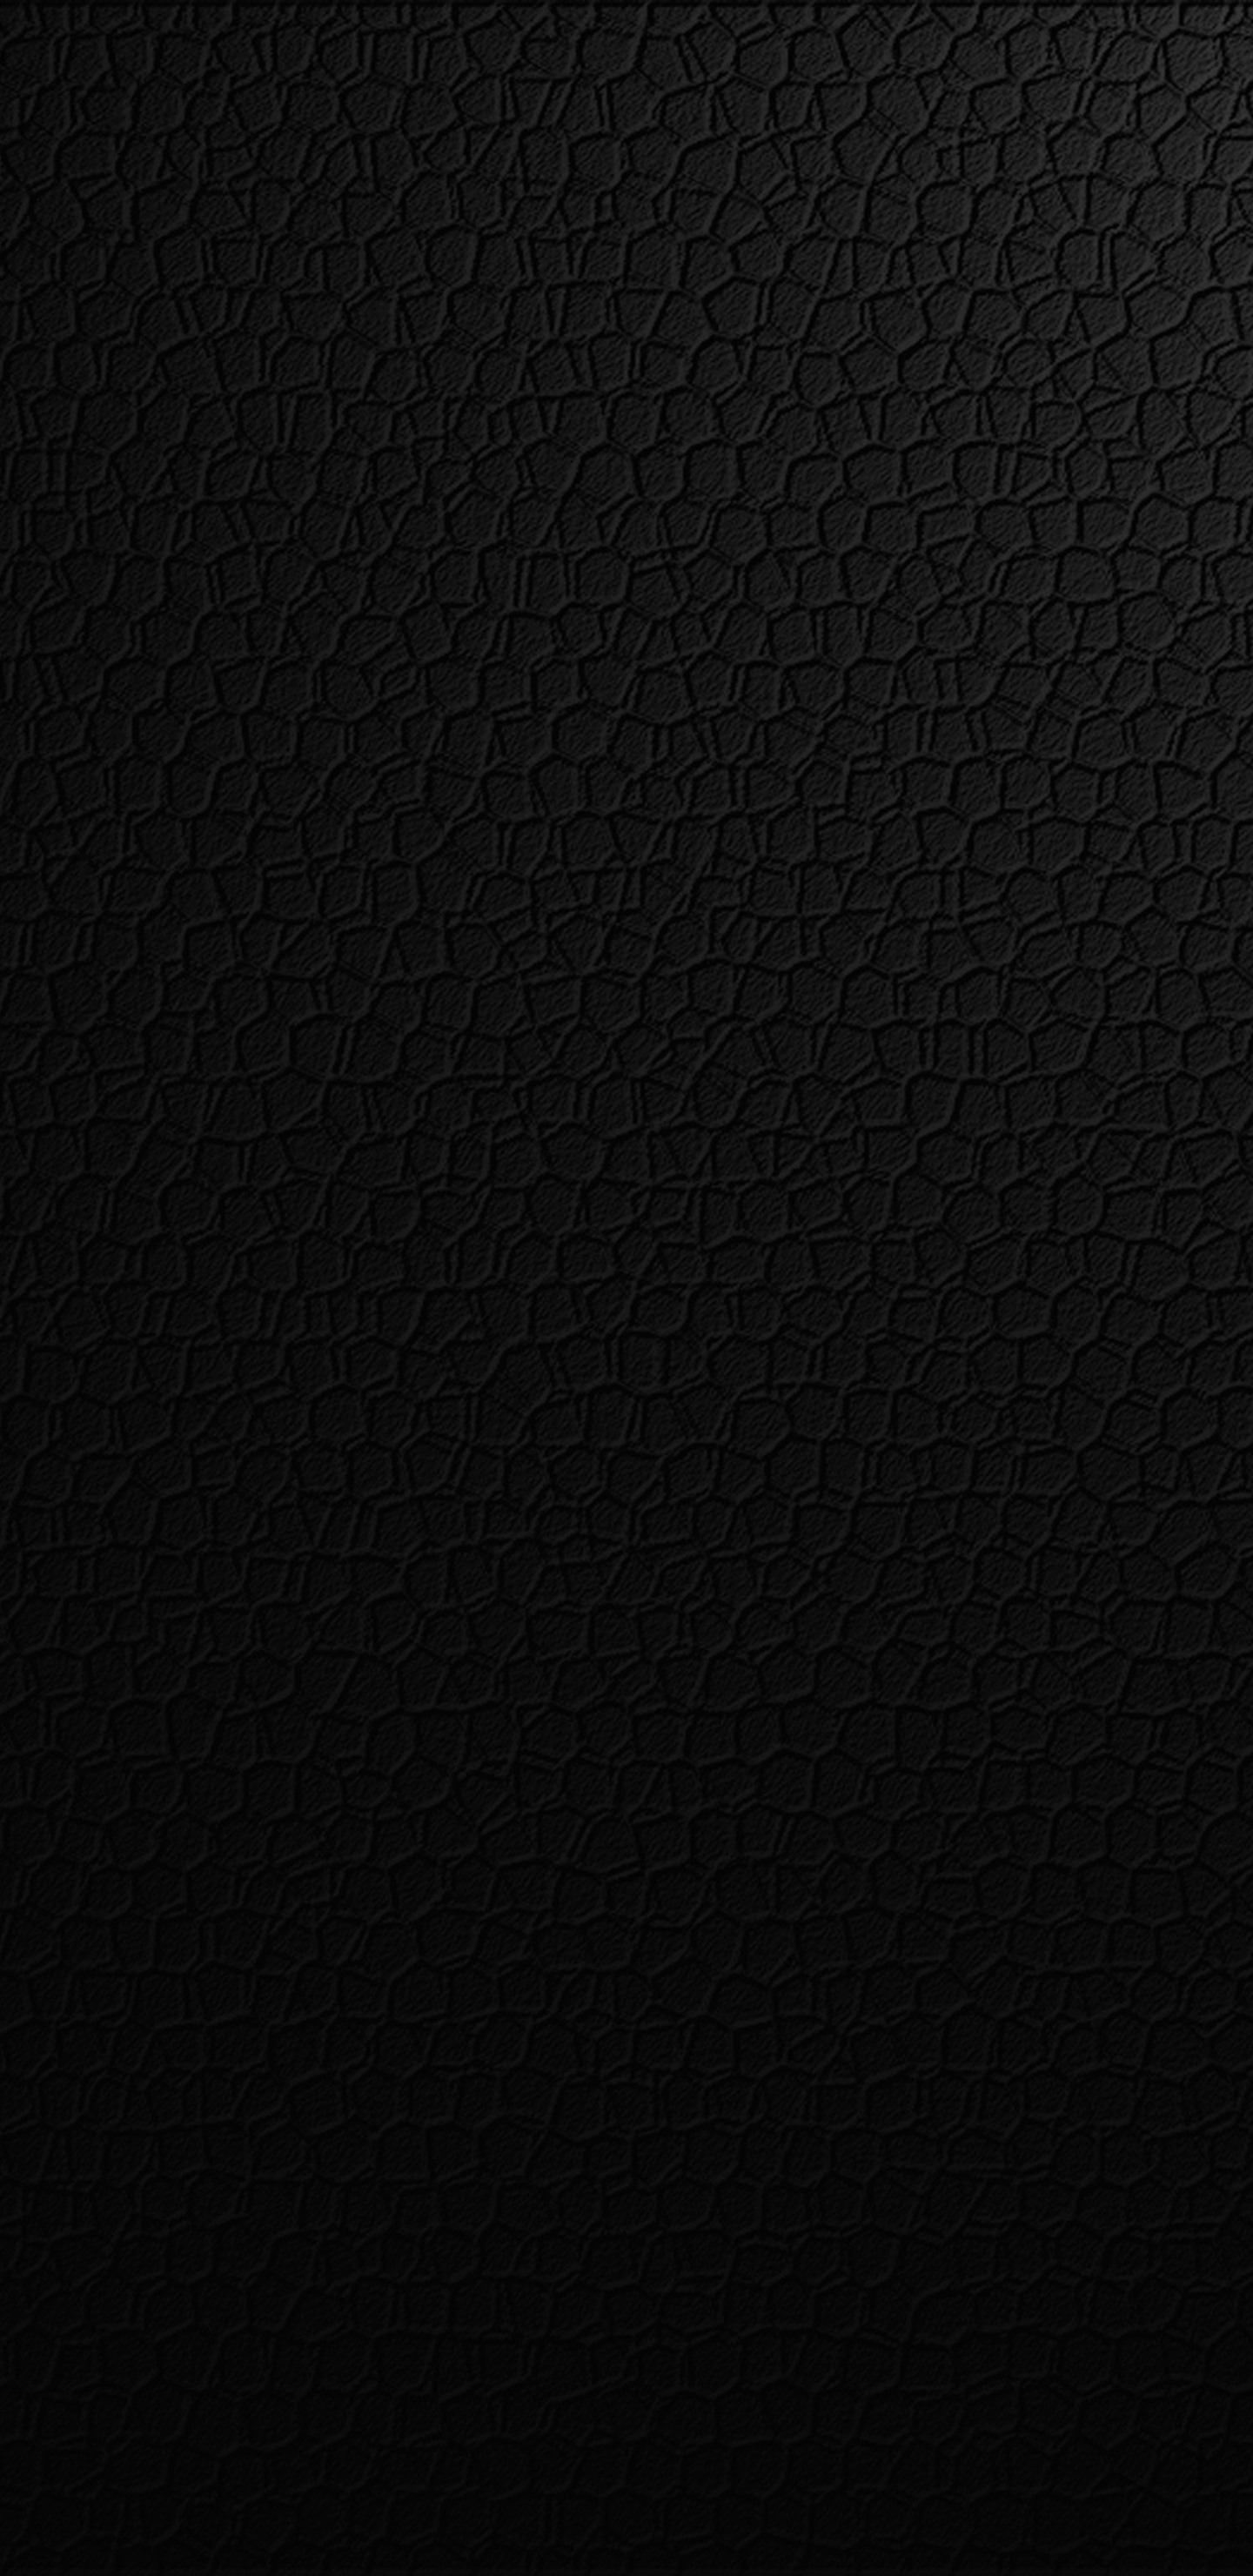 Download wallpaper 1440x2960 abstraction black dark background hd  background